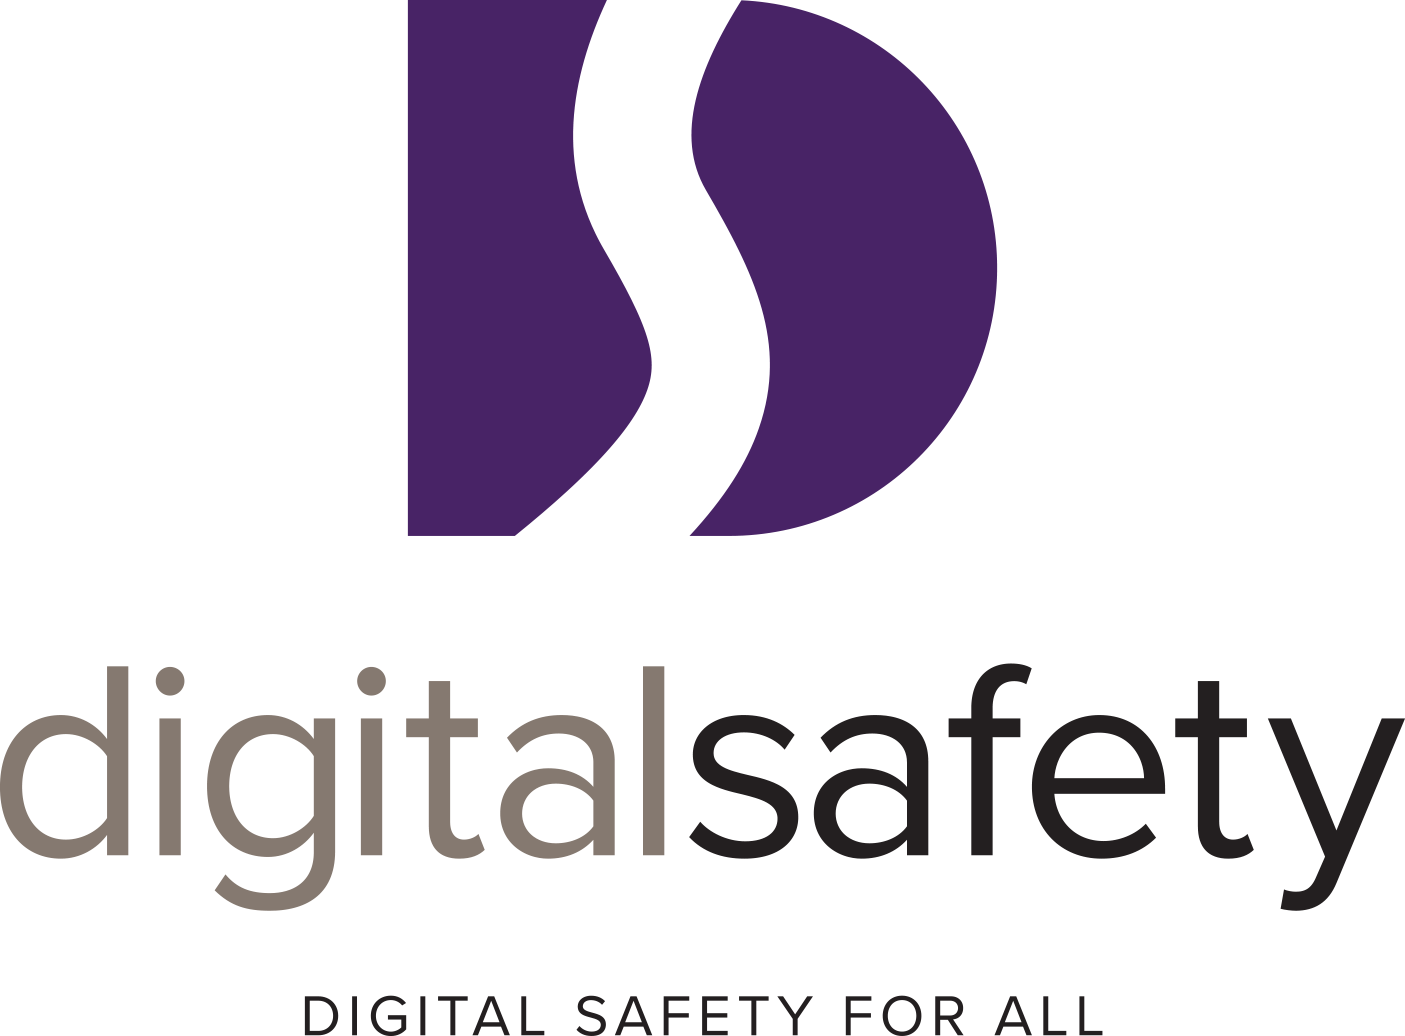 Digital Safety